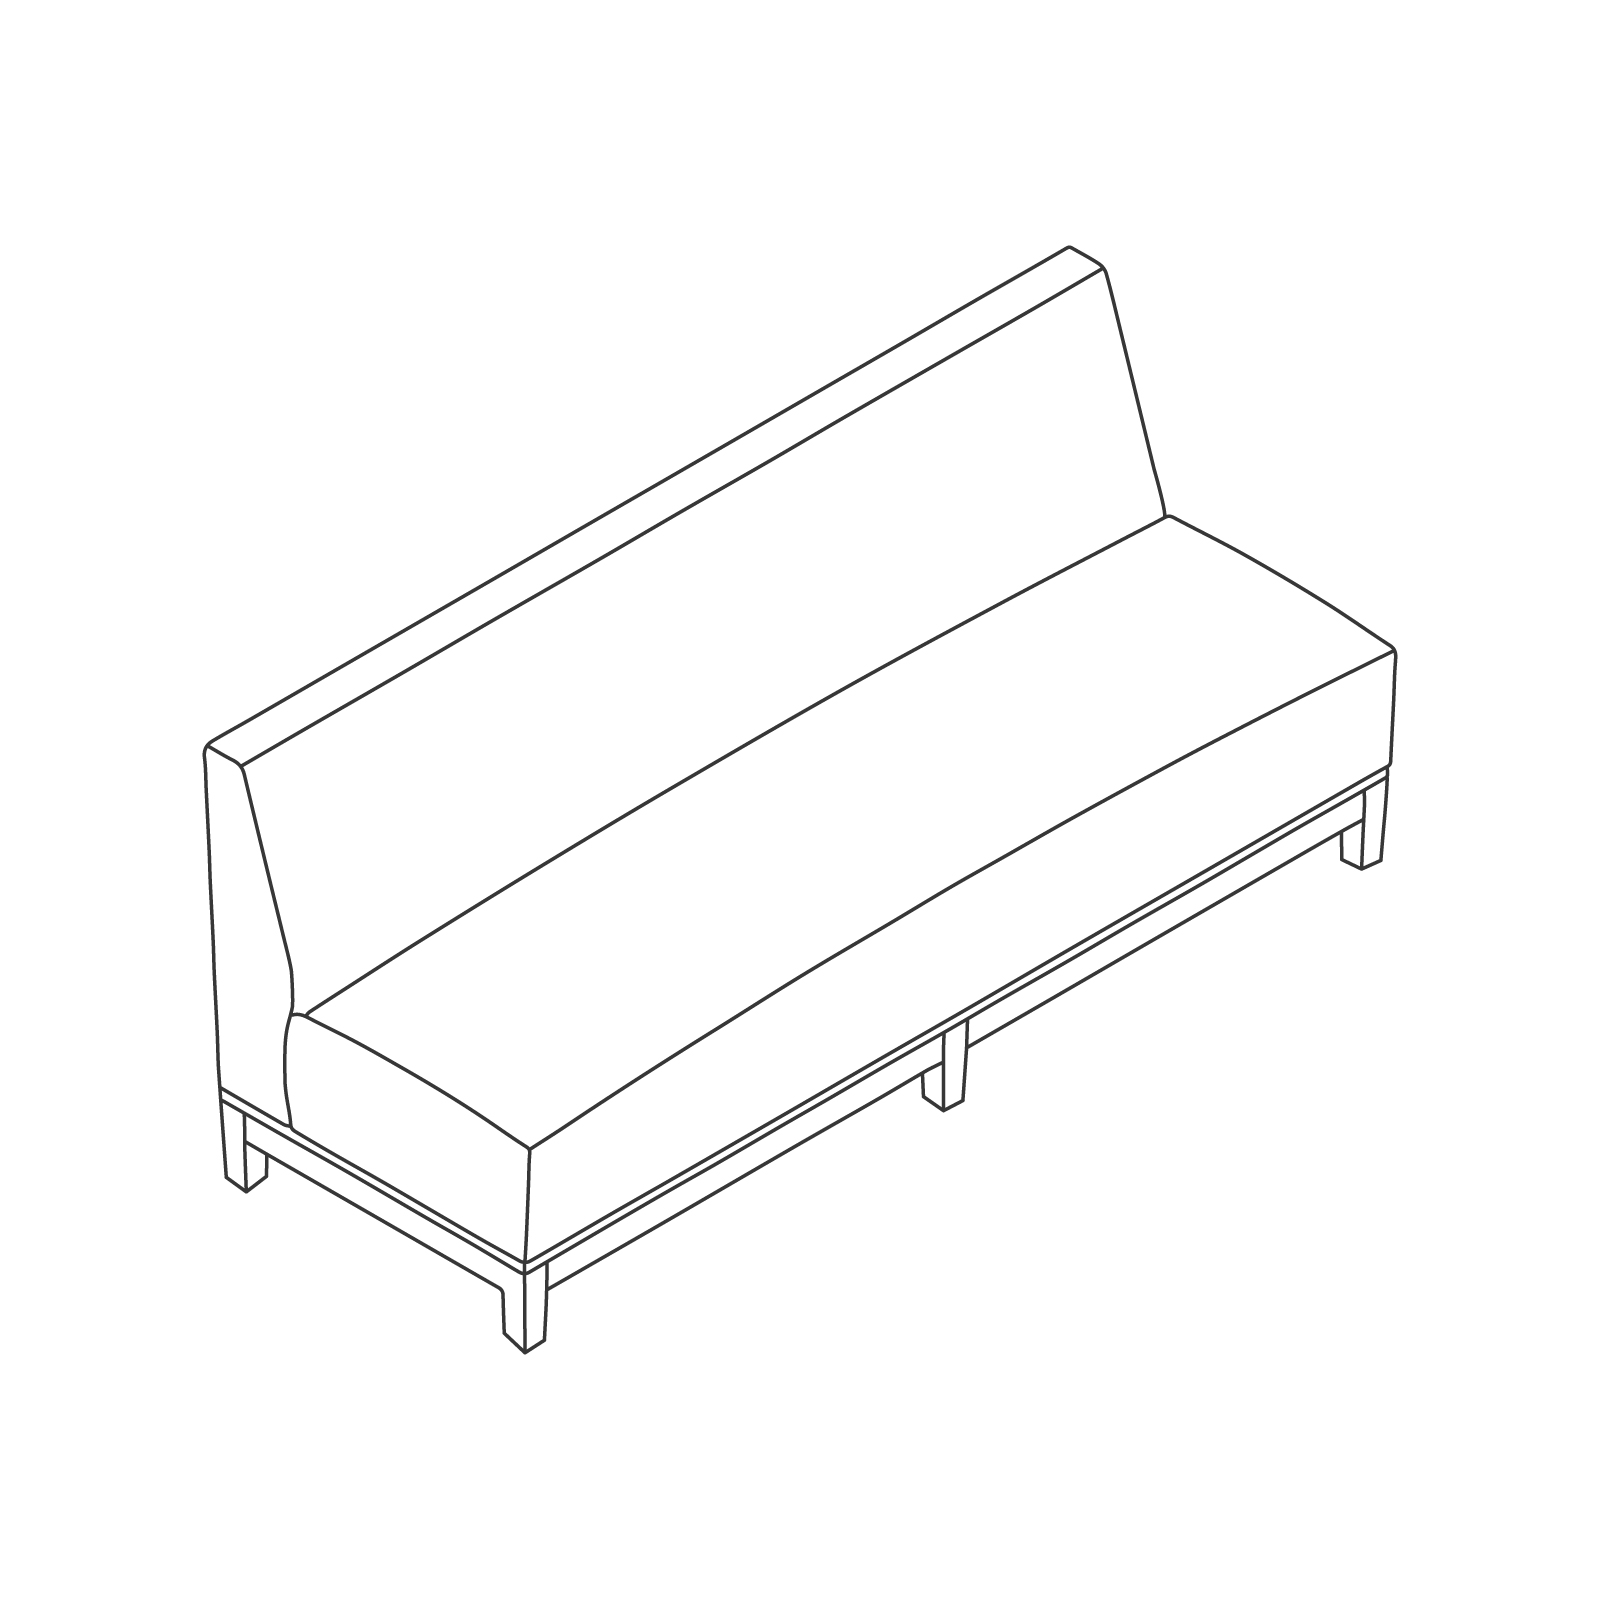 A line drawing - Nemschoff Brava Platform Multiple Seating–3 Seat–Armless